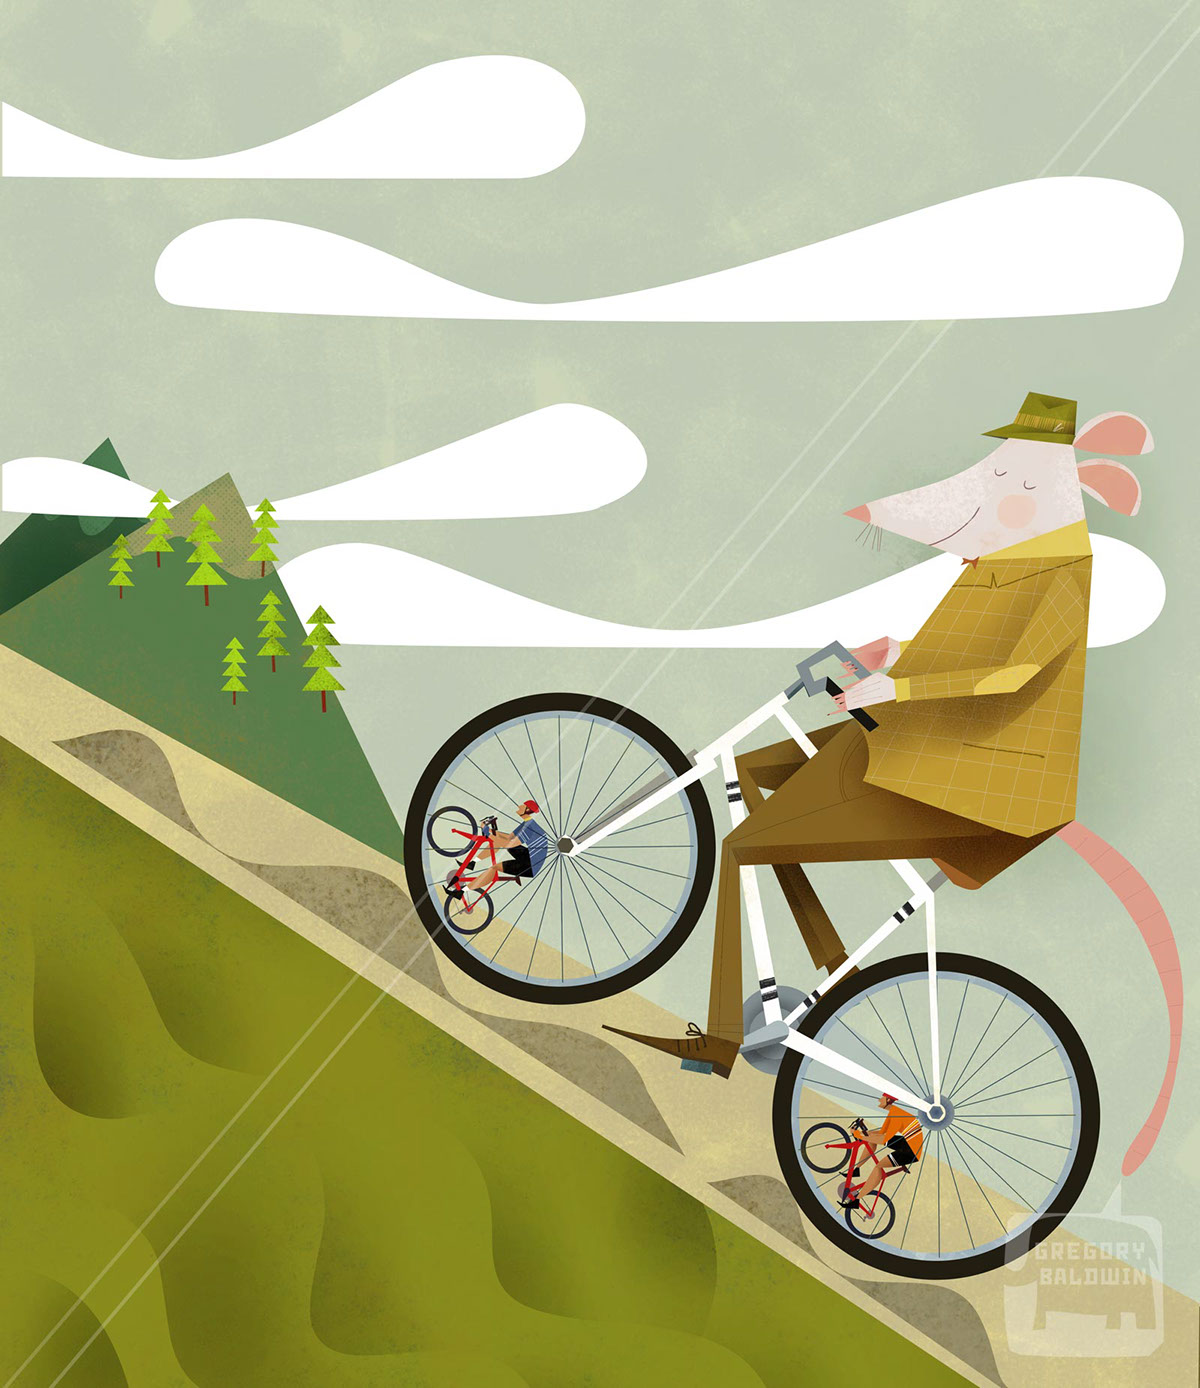 Adobe Portfolio rat hamster wheel Bicycle Bike cycle Road Race poster whimsical Tour de France Triathlon sport gentleman mouse